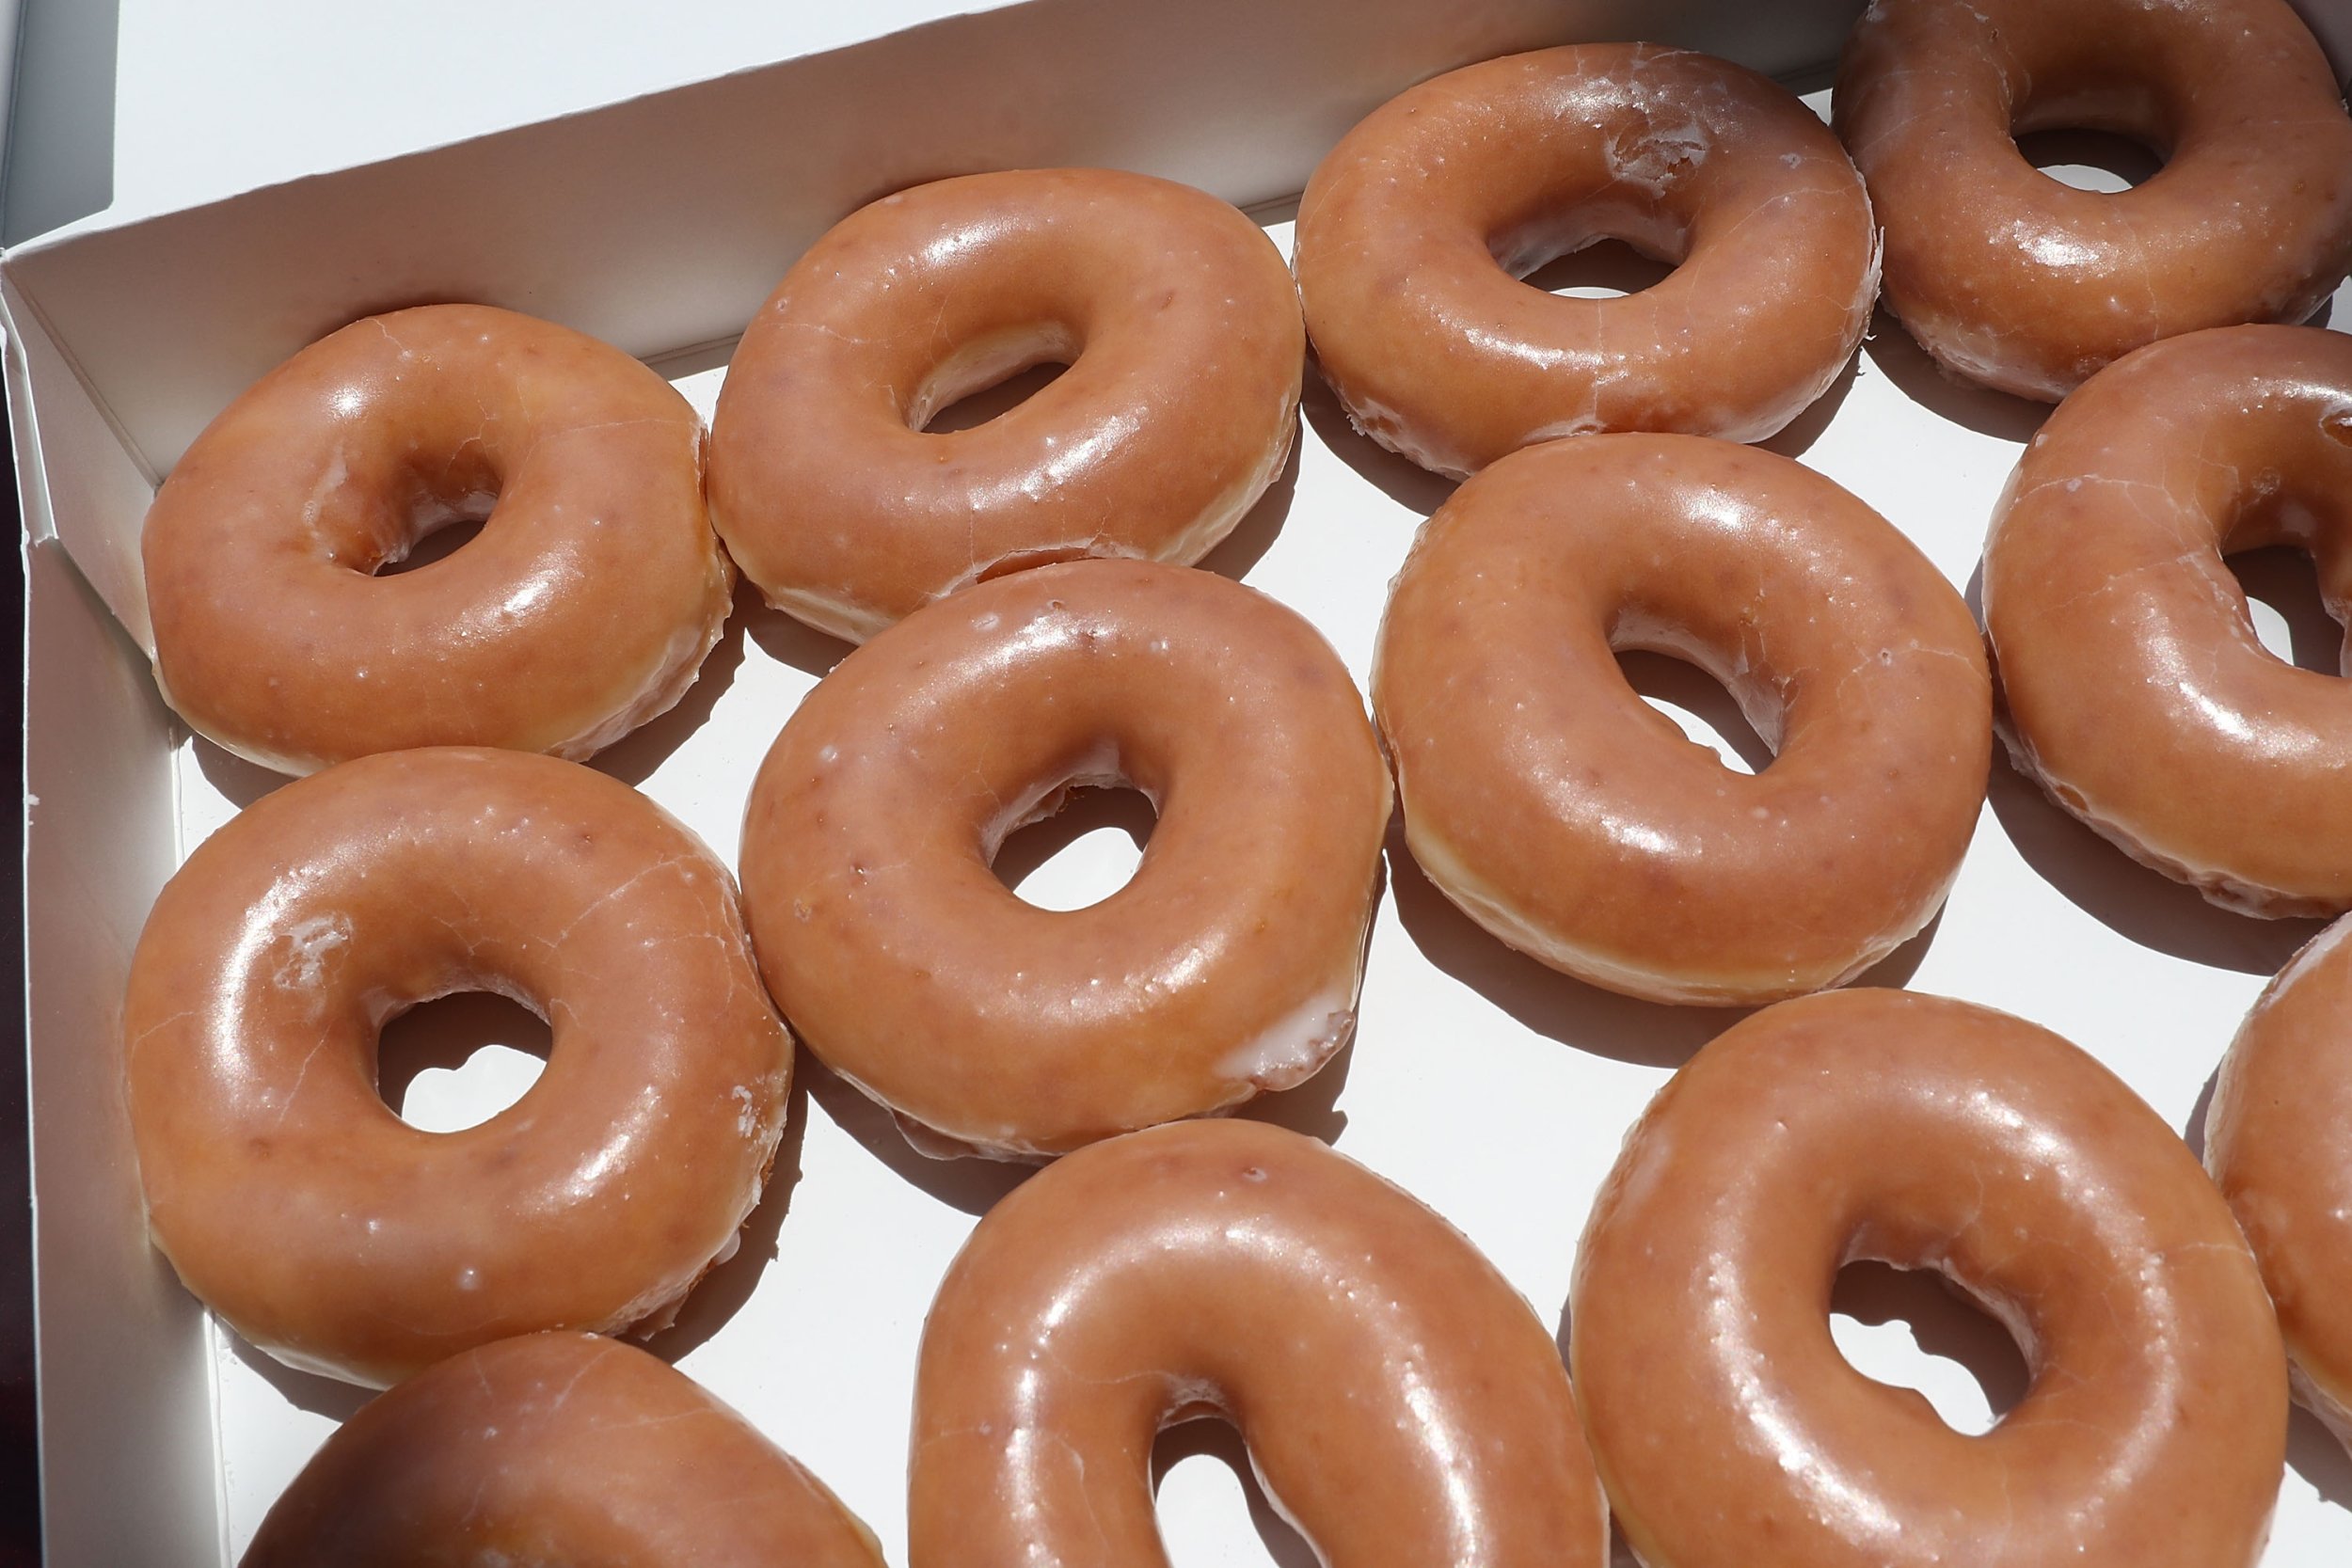 Talk Like A Pirate Day 2016 At Krispy Kreme; 3 Ways To Get Free Doughnuts